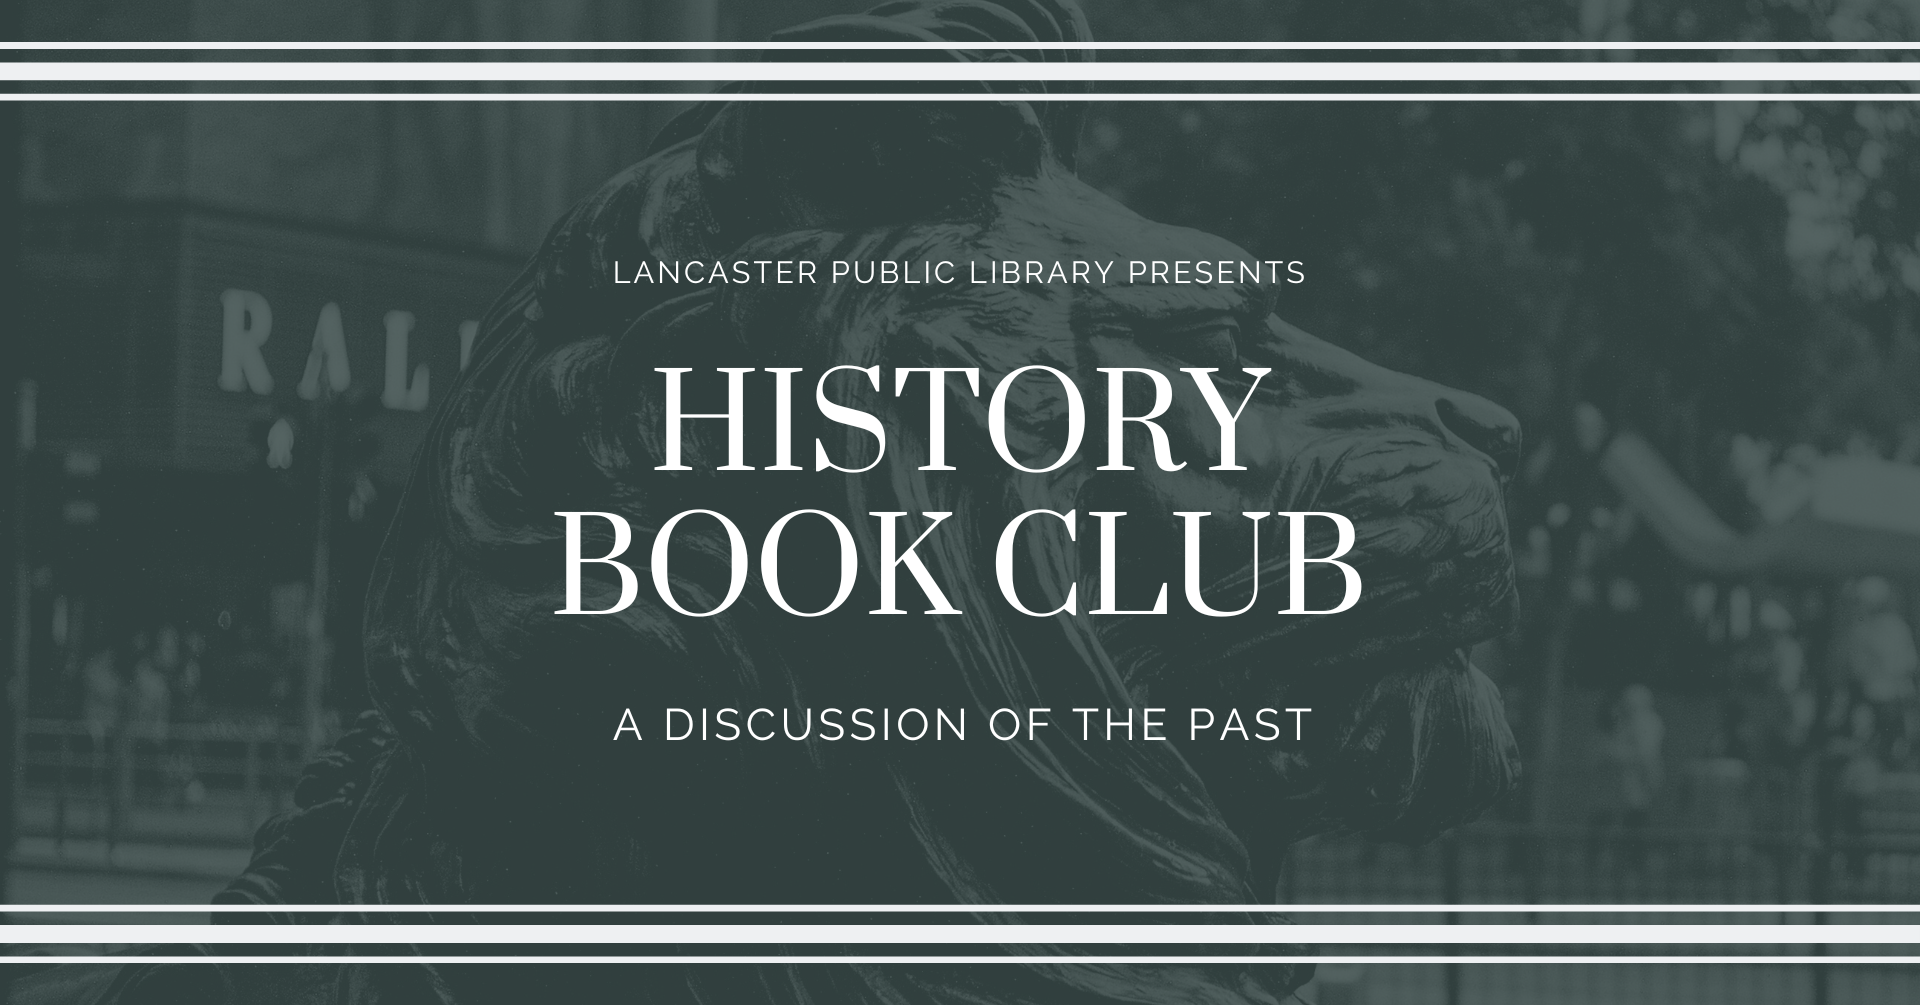 LPL presents History Book Club written over lion statue